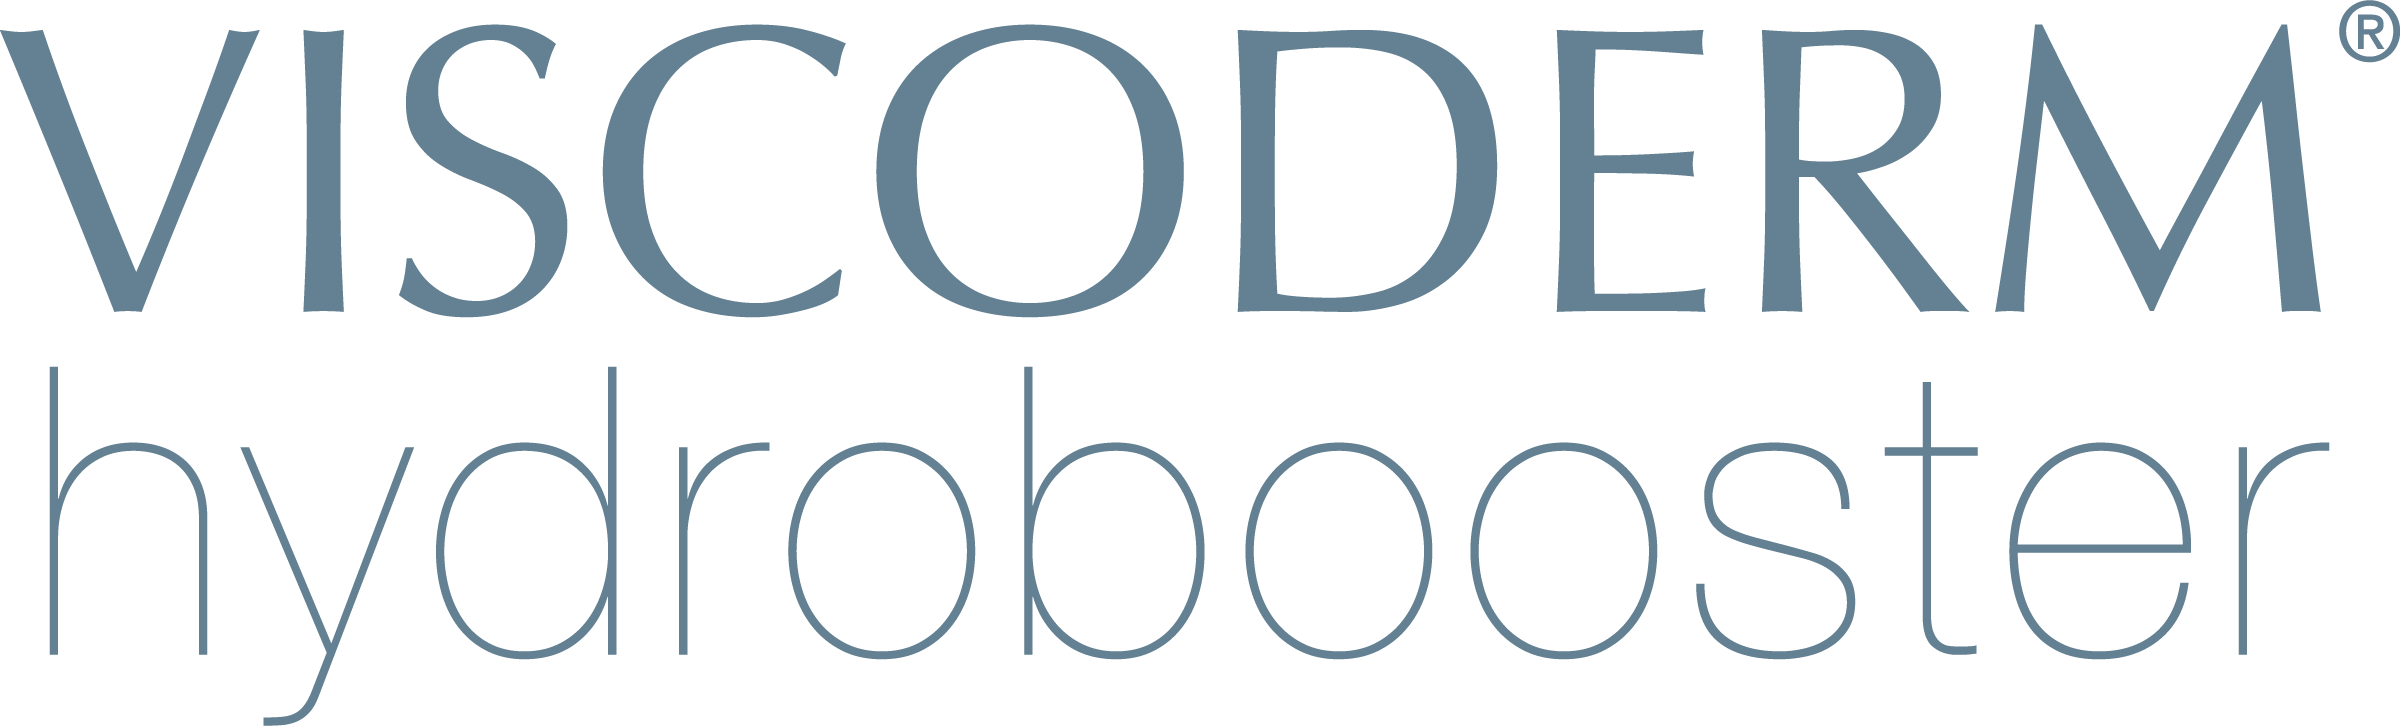 Viscoderm Hydrobooster Logo